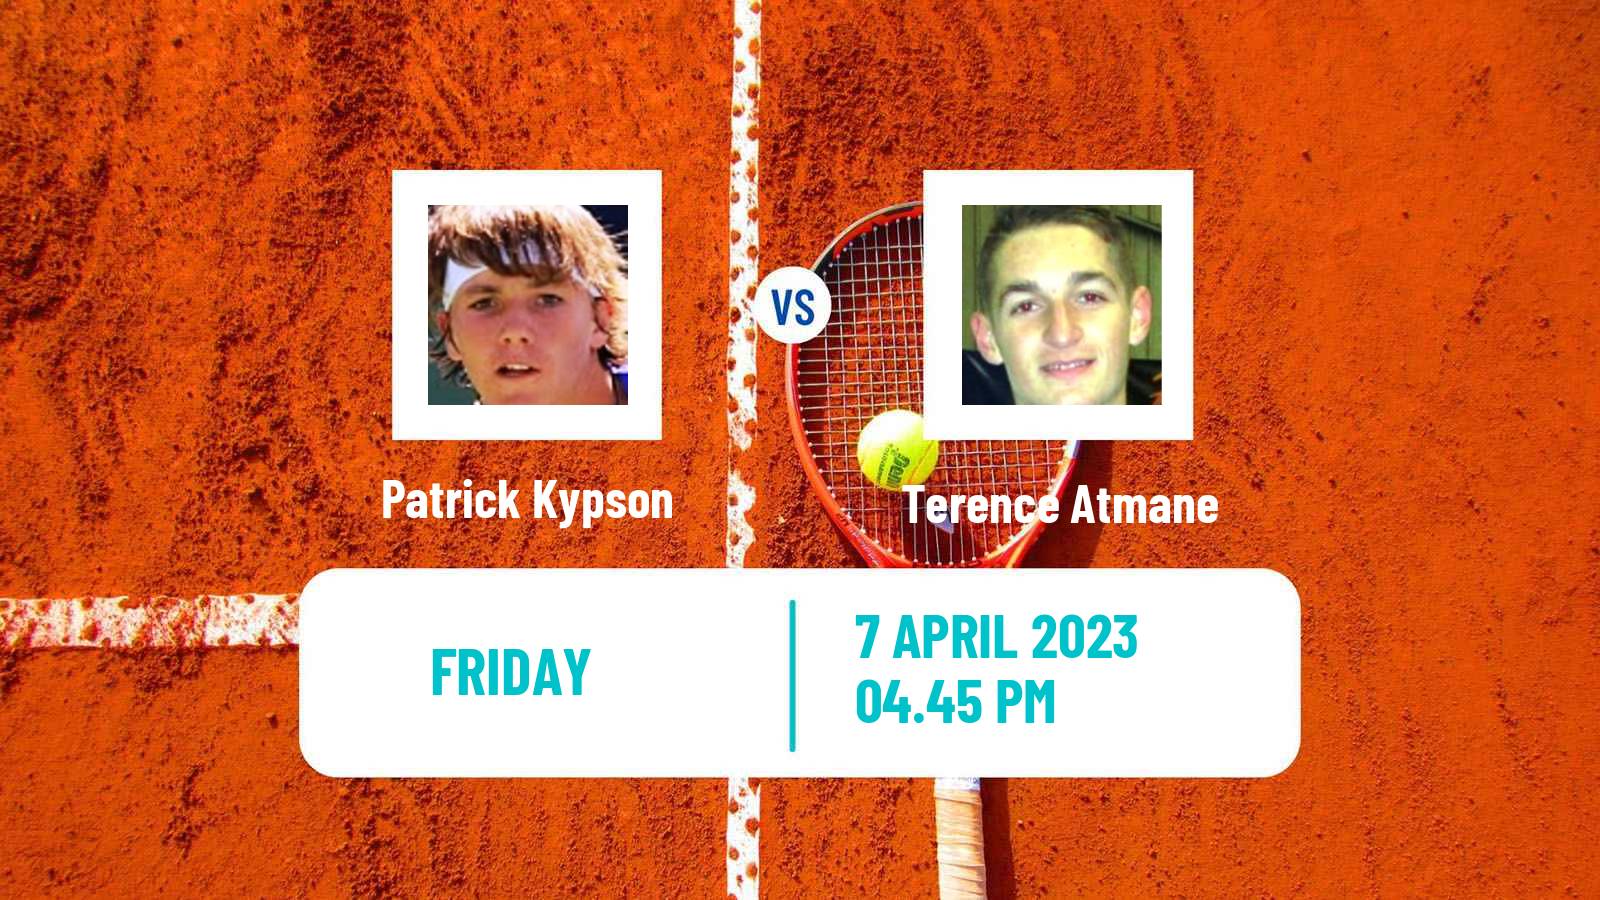 Tennis ATP Challenger Patrick Kypson - Terence Atmane